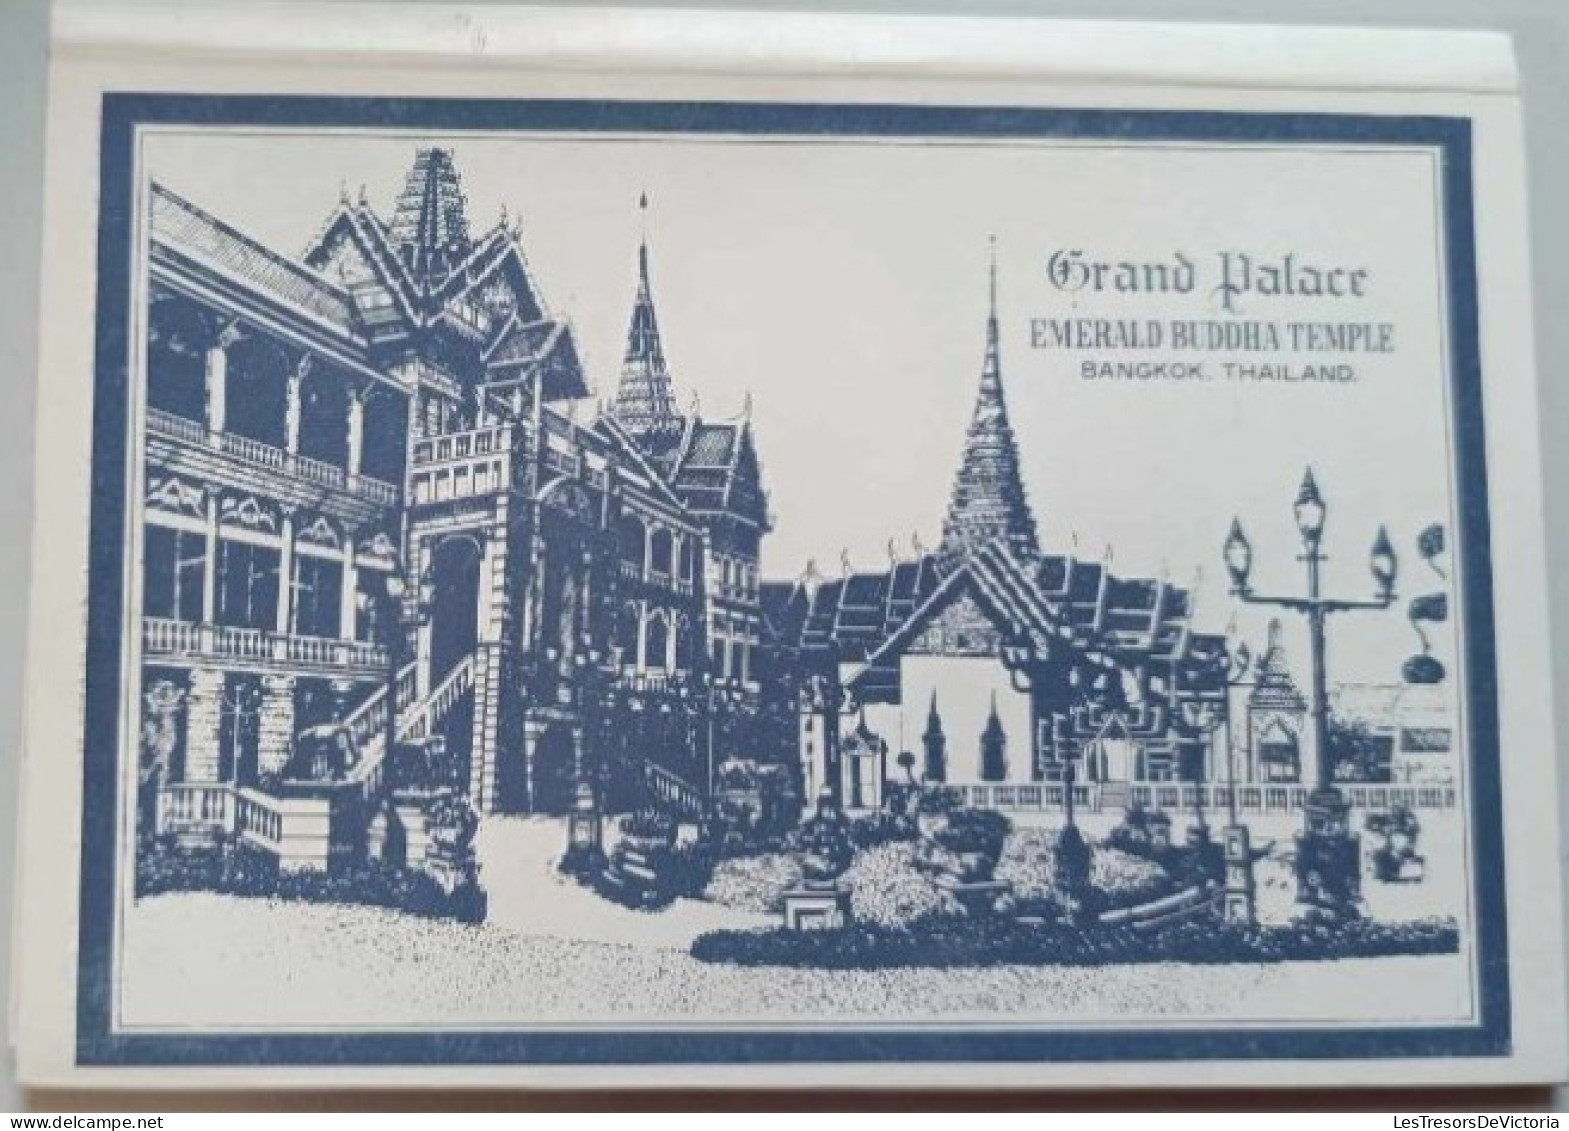 Carnet De Cartes Complet - Thaïlande - Bongkok - Emerald Buddha Temple - Grand Palace - Carte Postale Ancienne - Thaïlande